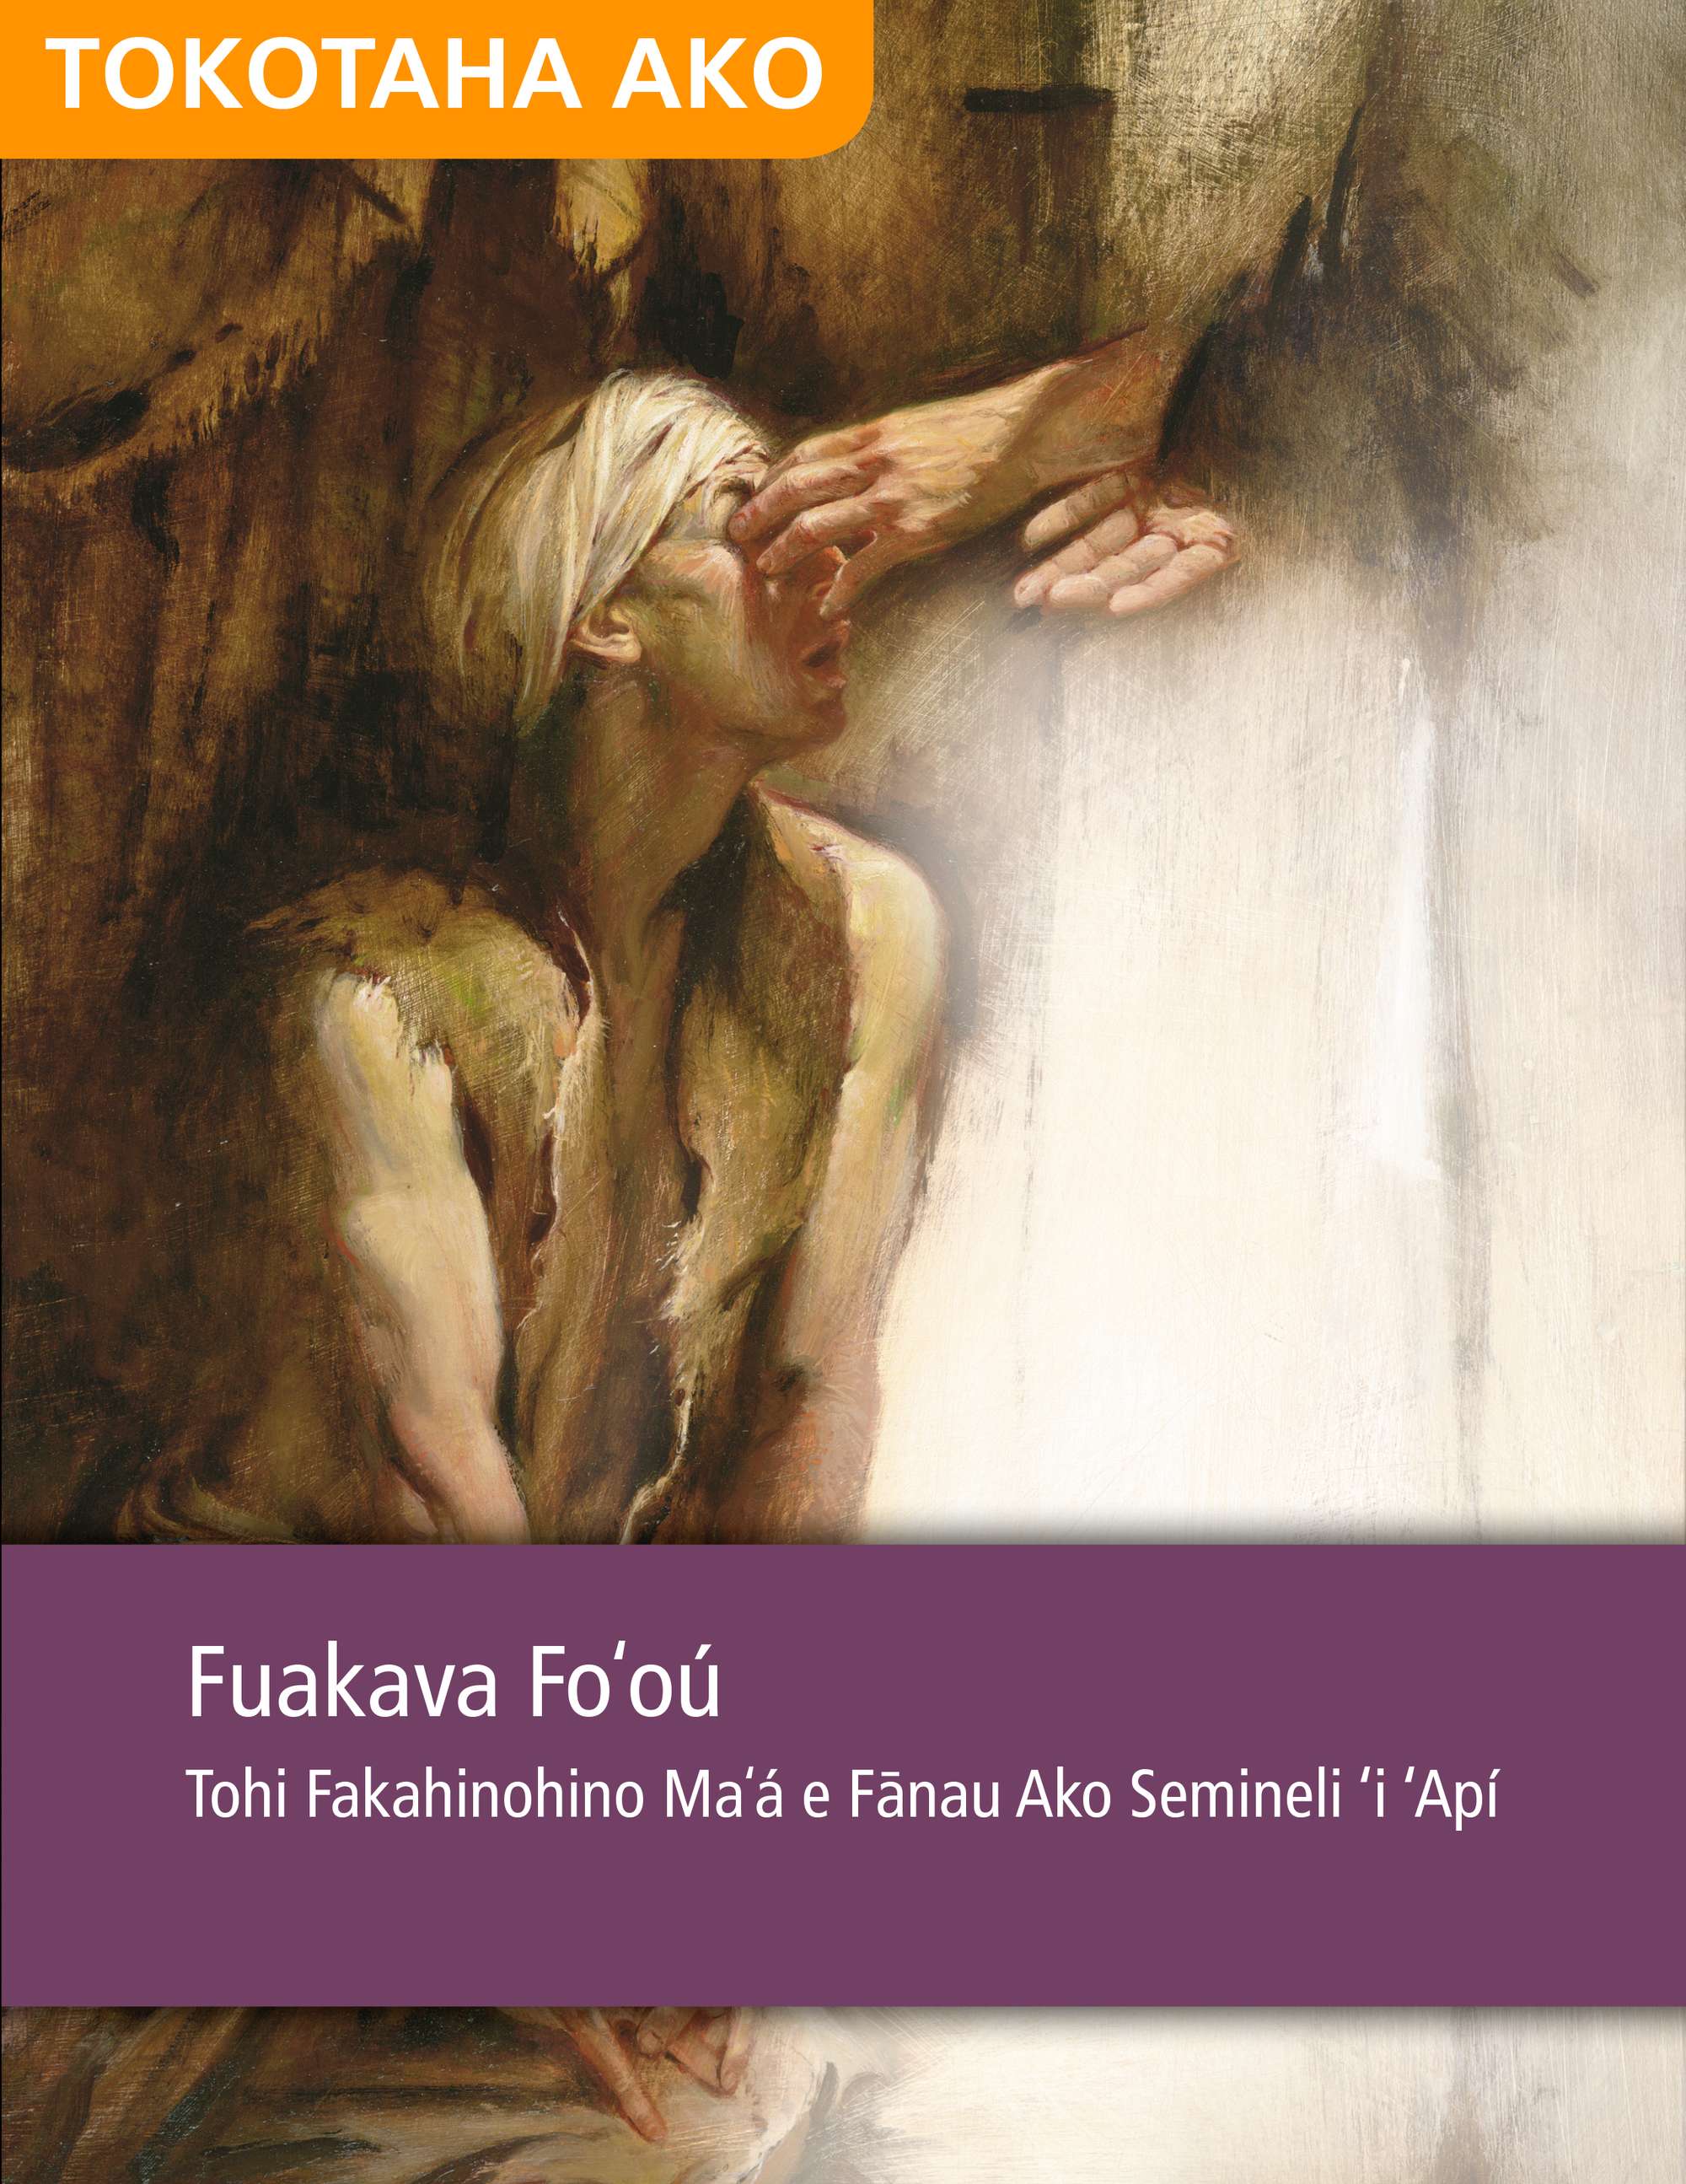 Tohi Fakahinohino Ako ‘o e Fuakava Foʻoú maʻá e Fānau Ako Semineli ‘i ‘Apí